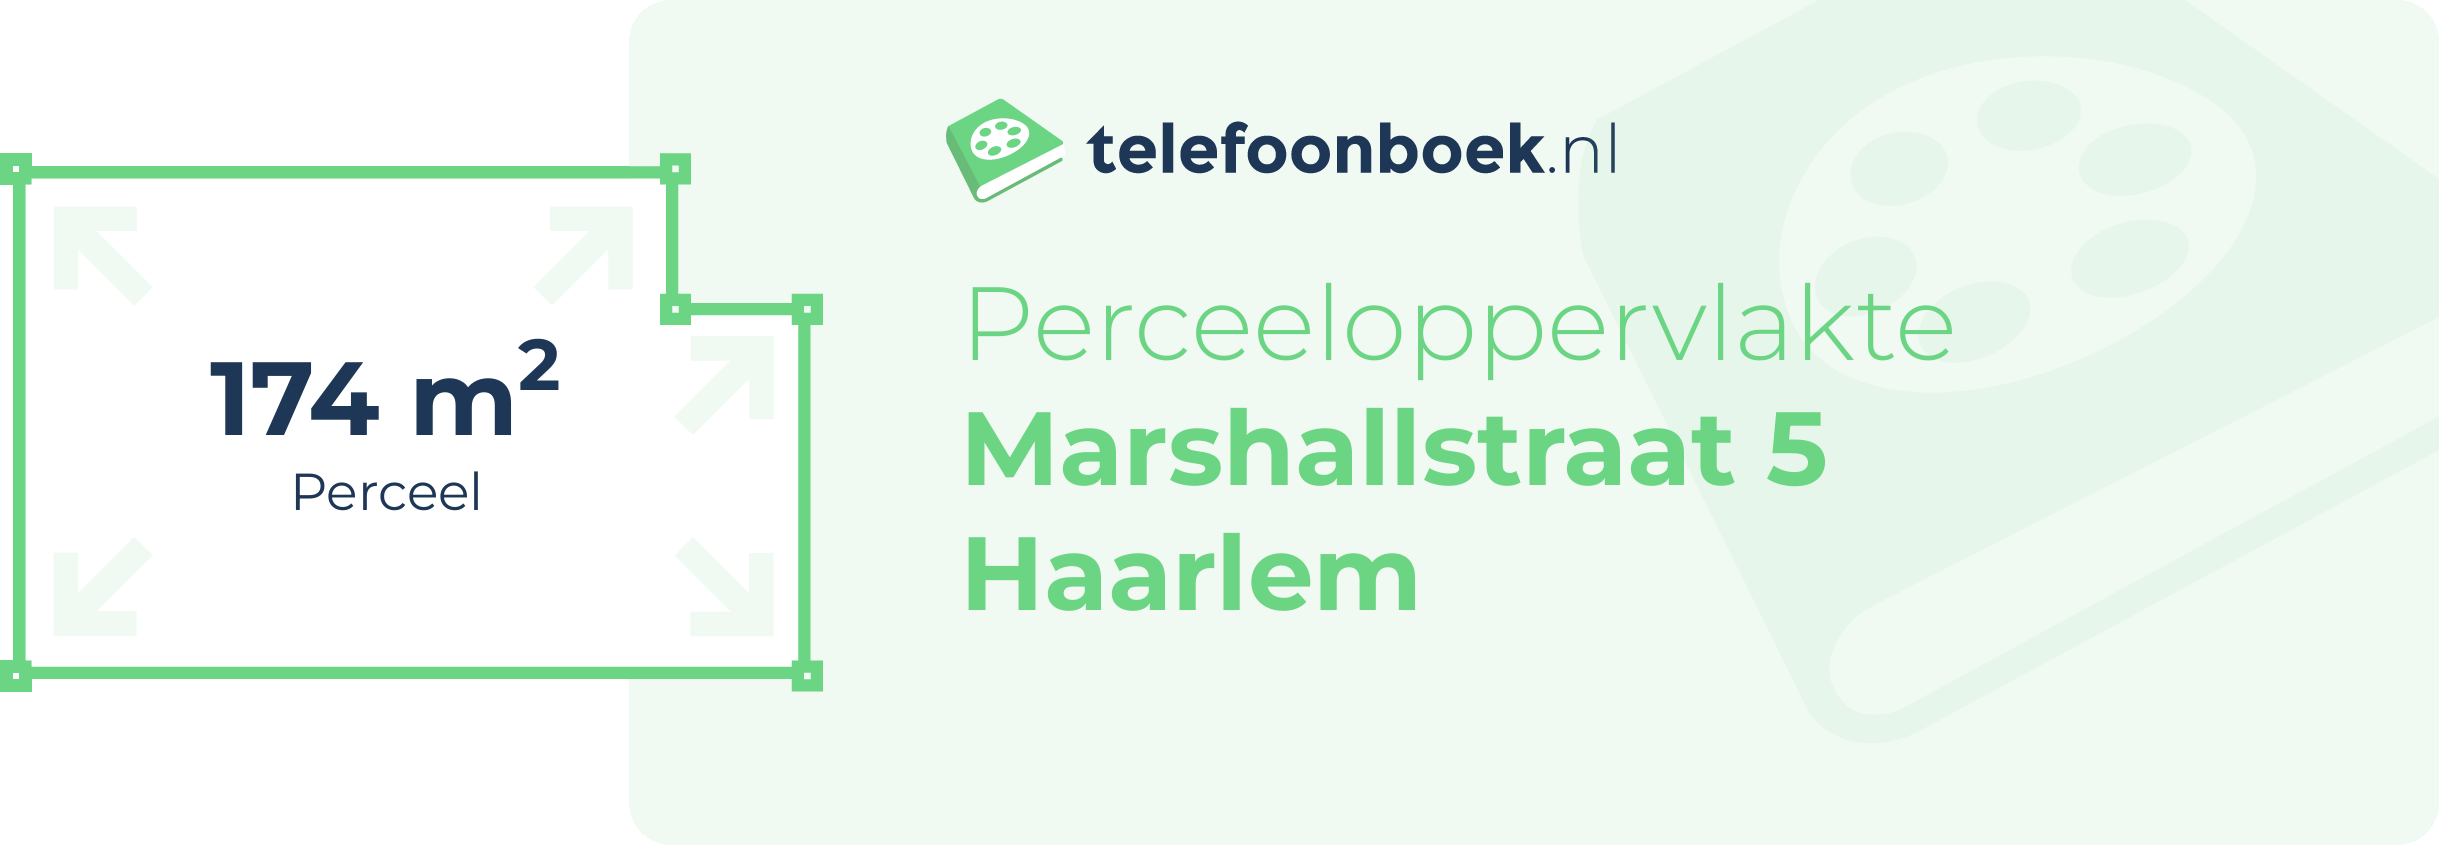 Perceeloppervlakte Marshallstraat 5 Haarlem